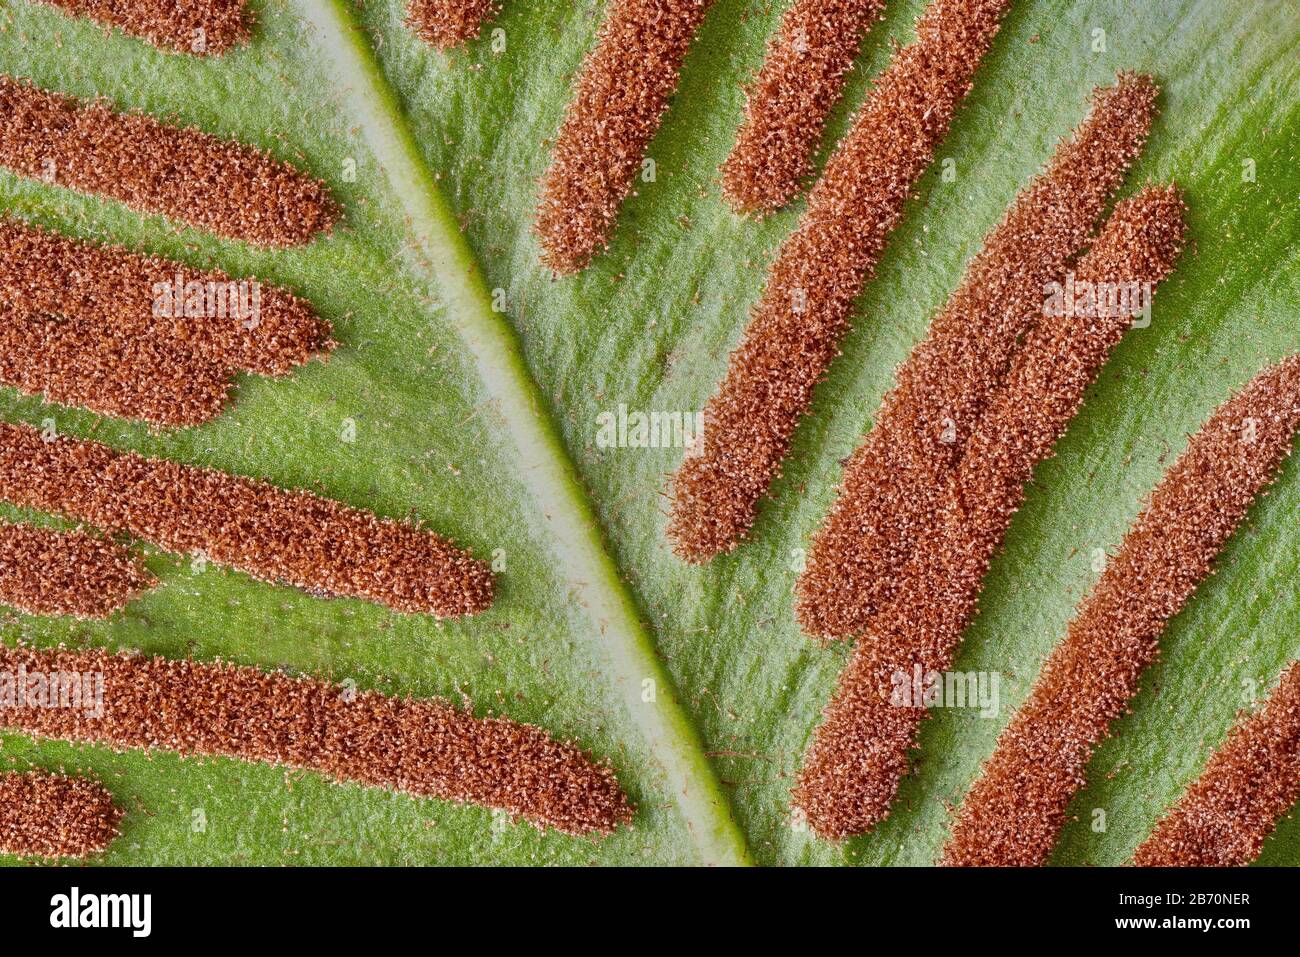 Elongated sori of Hart's Tongue fern Phyllitis or Asplenium scolopendrium on the underside of leaves - Somerset UK Stock Photo